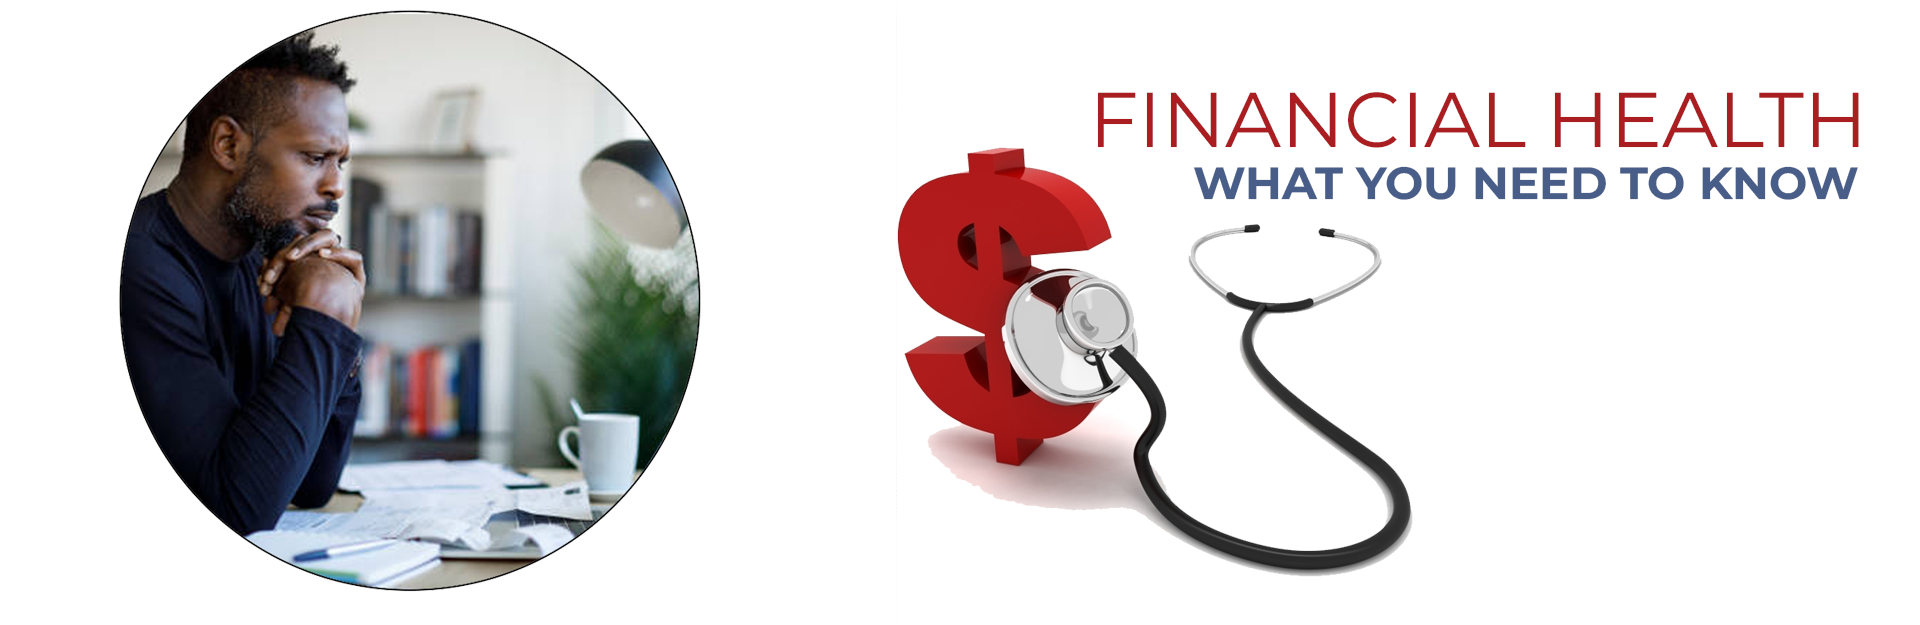 FINANCIAL HEALTH blog